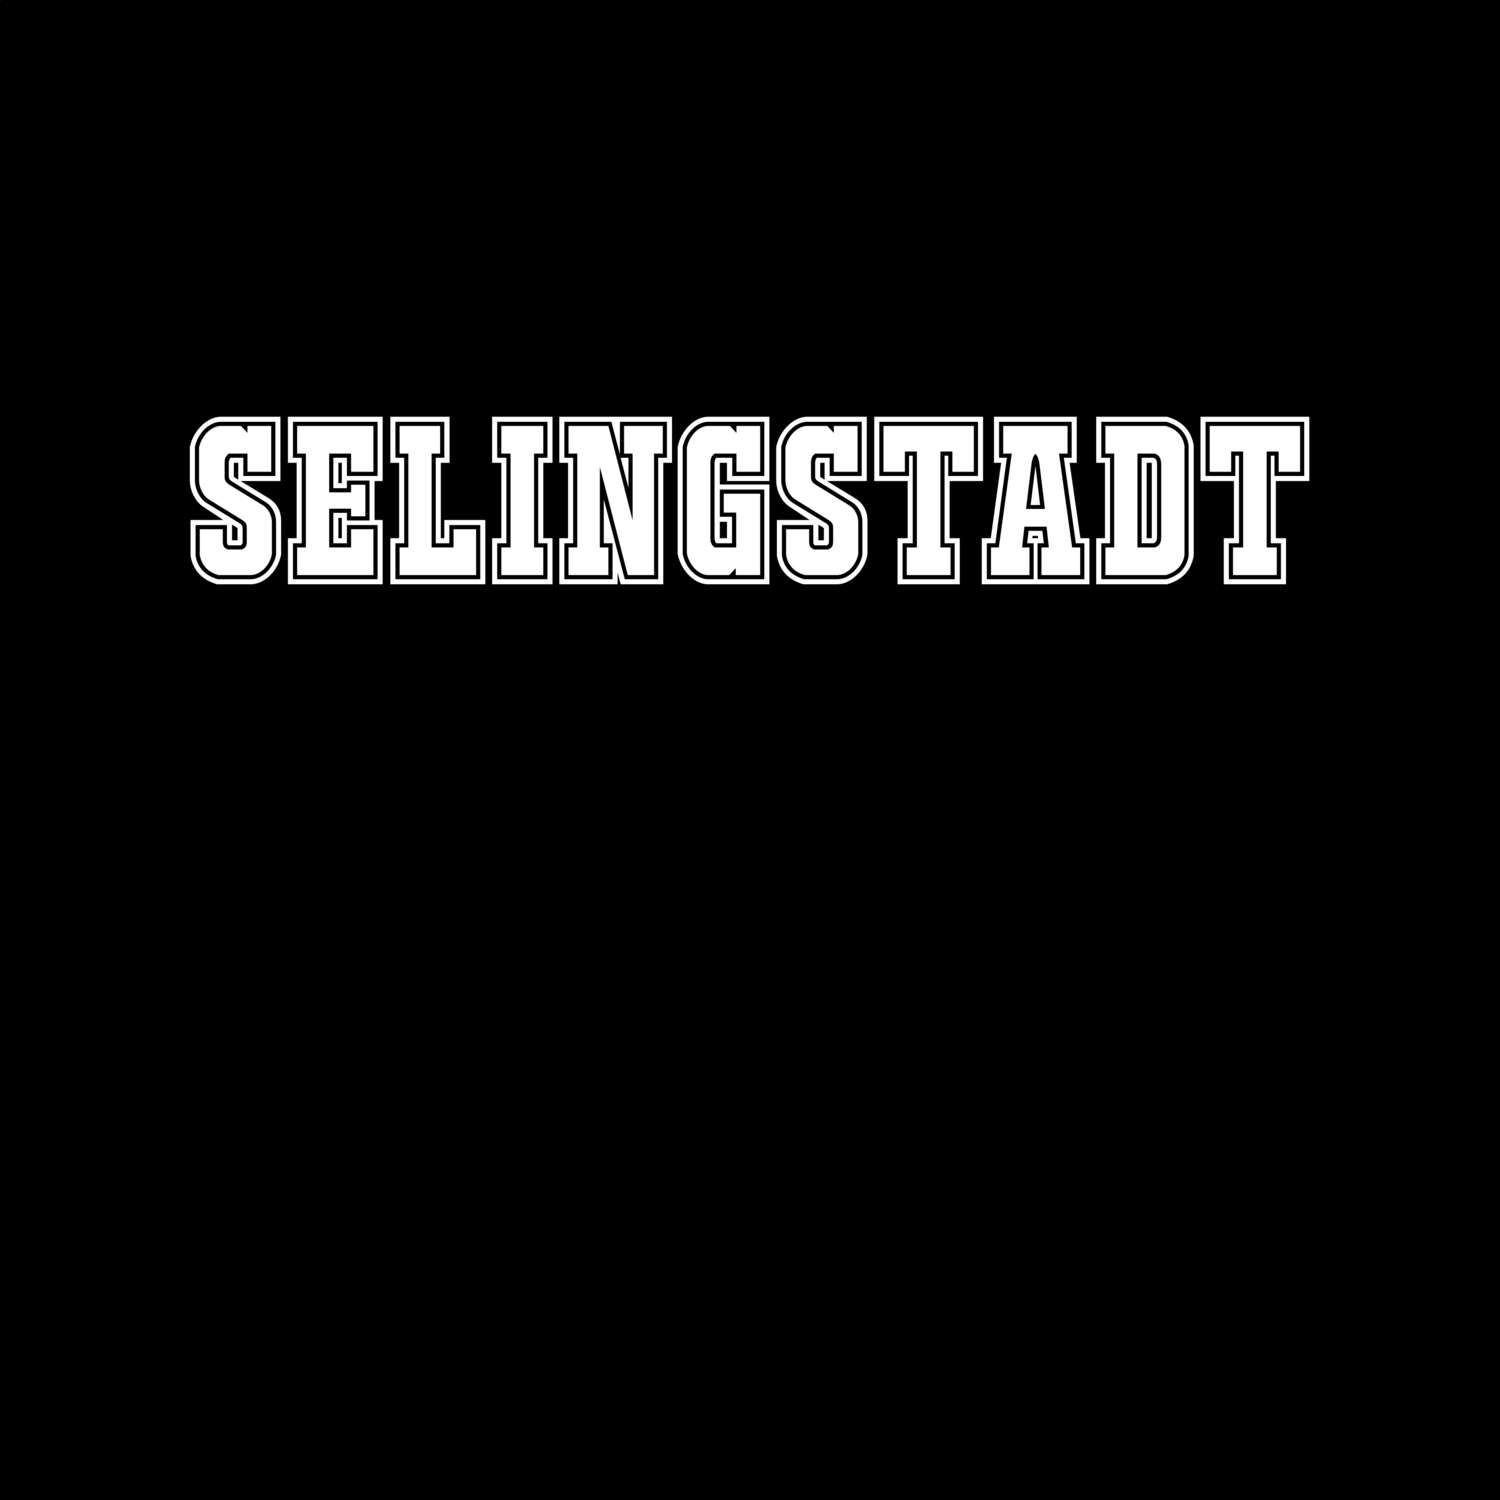 Selingstadt T-Shirt »Classic«